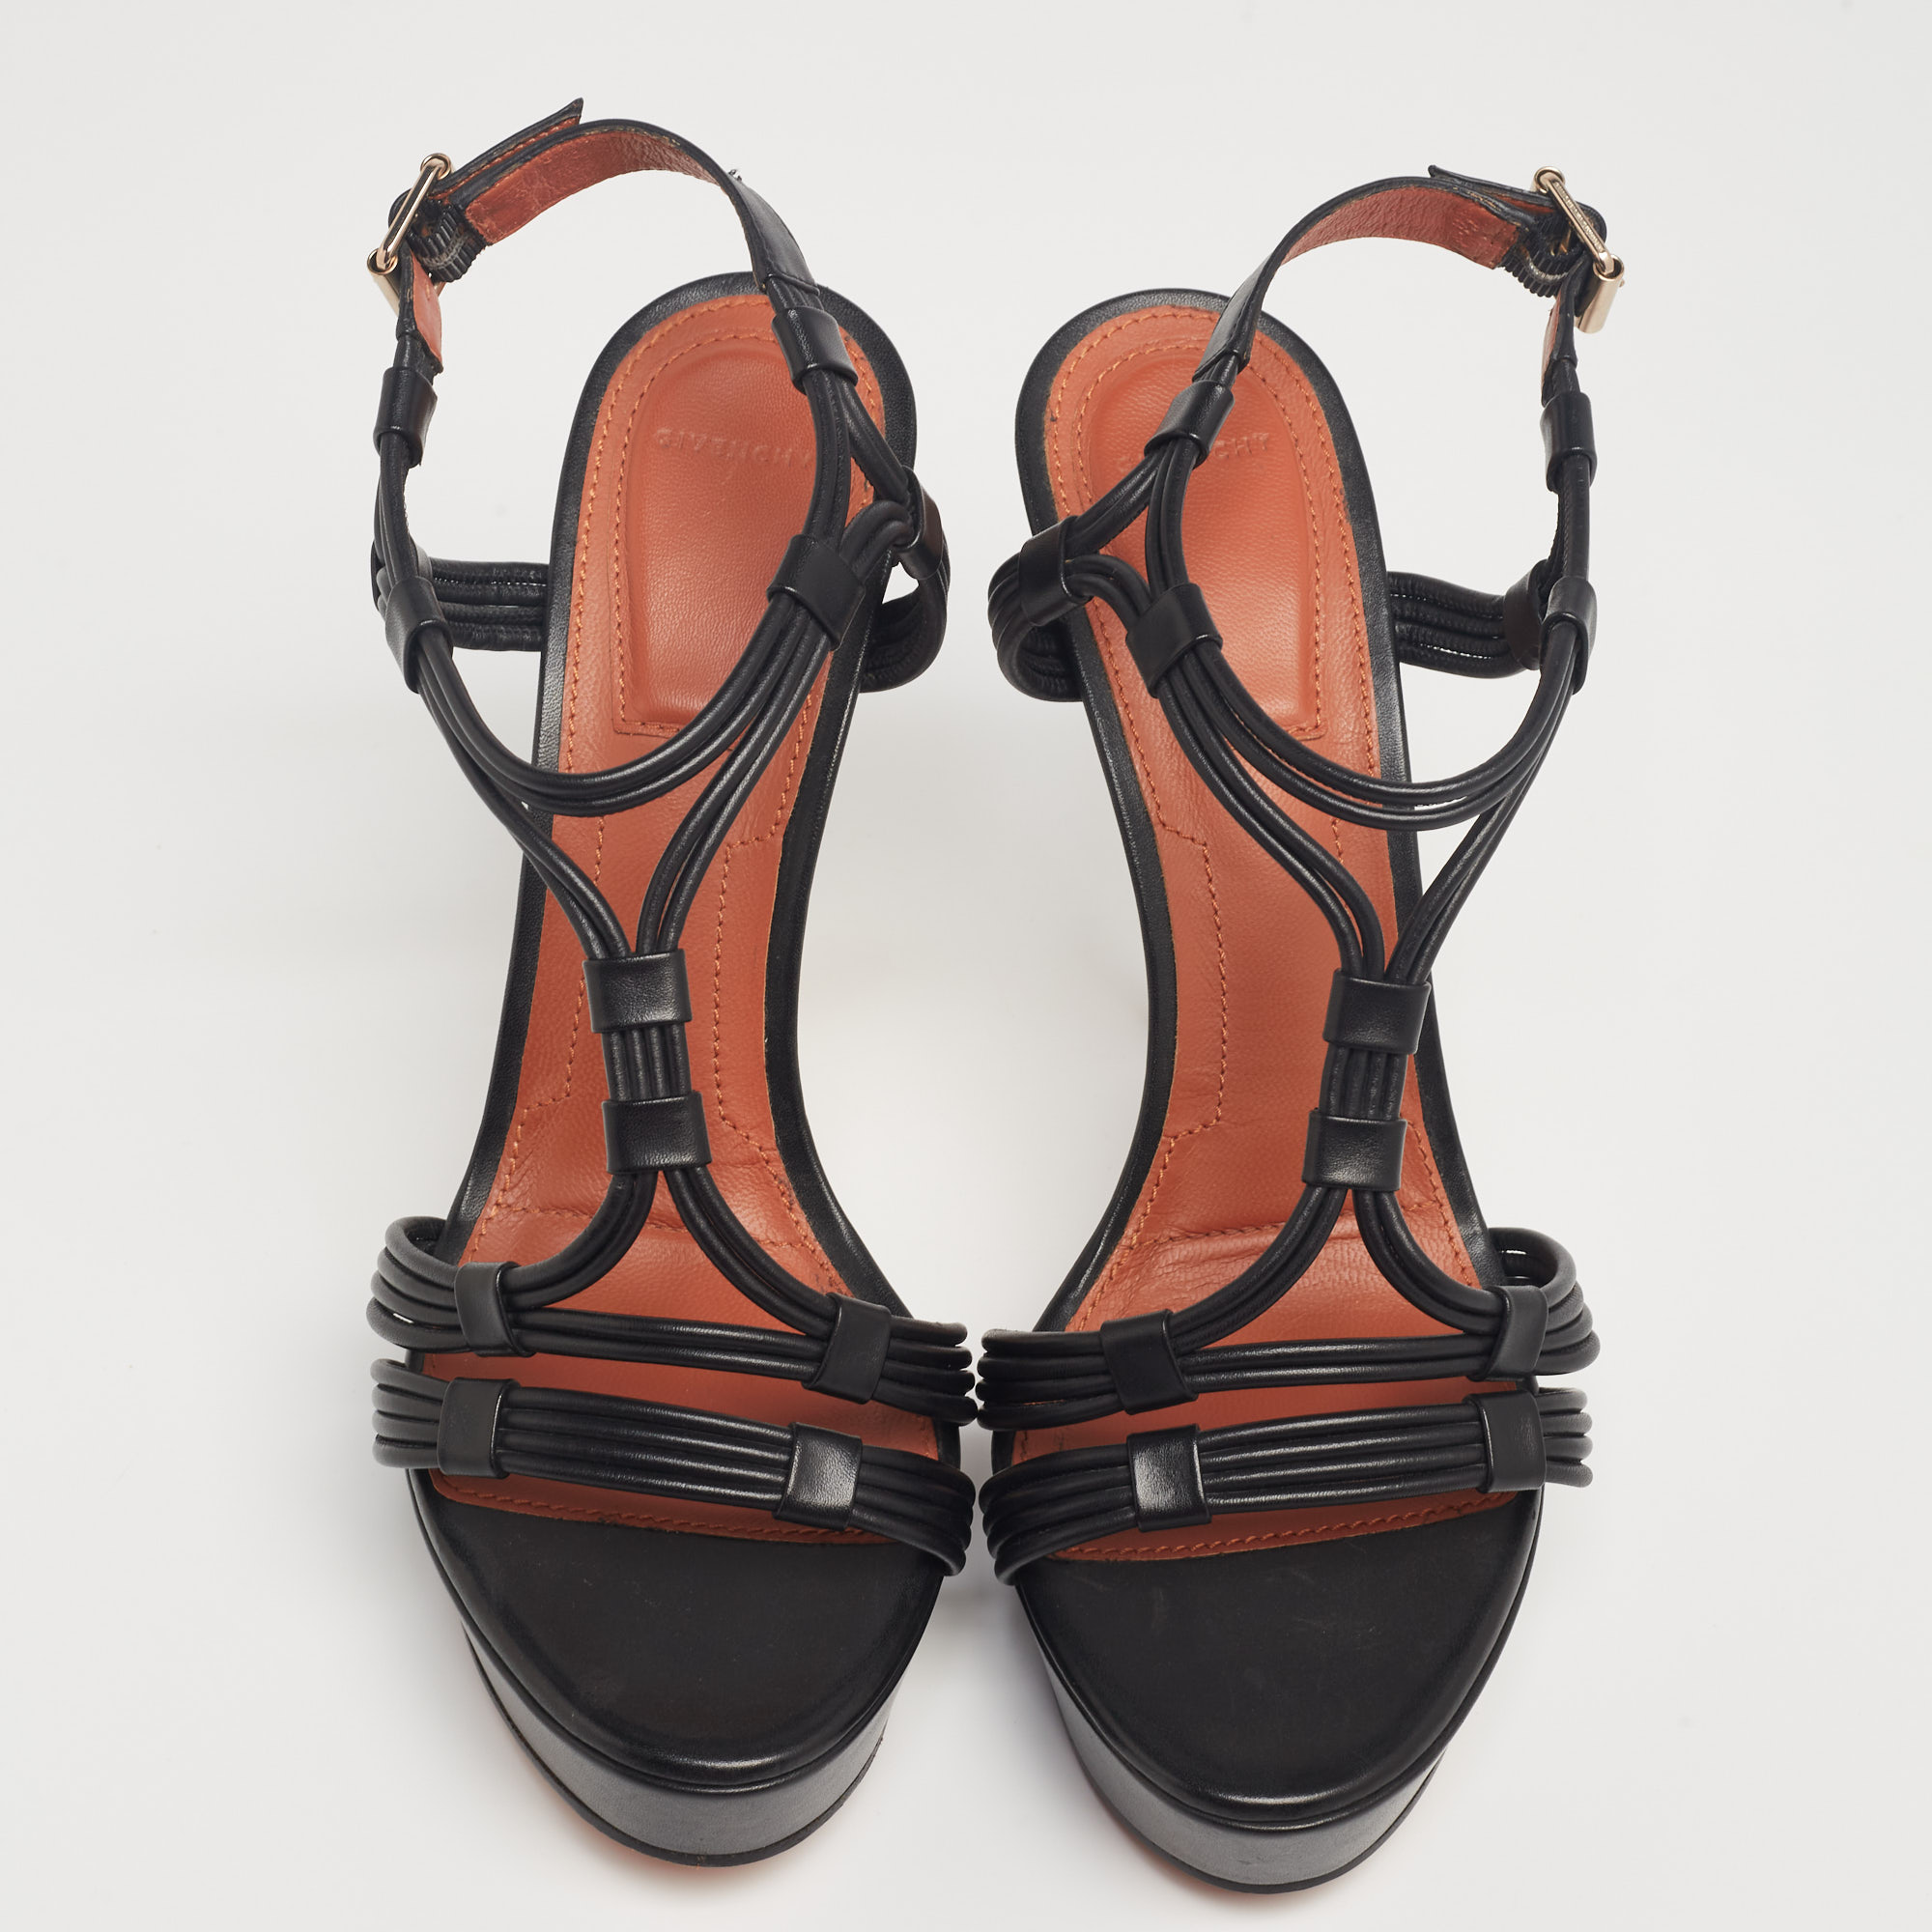 Givenchy Black Leather Platform Strappy Sandals Size 41